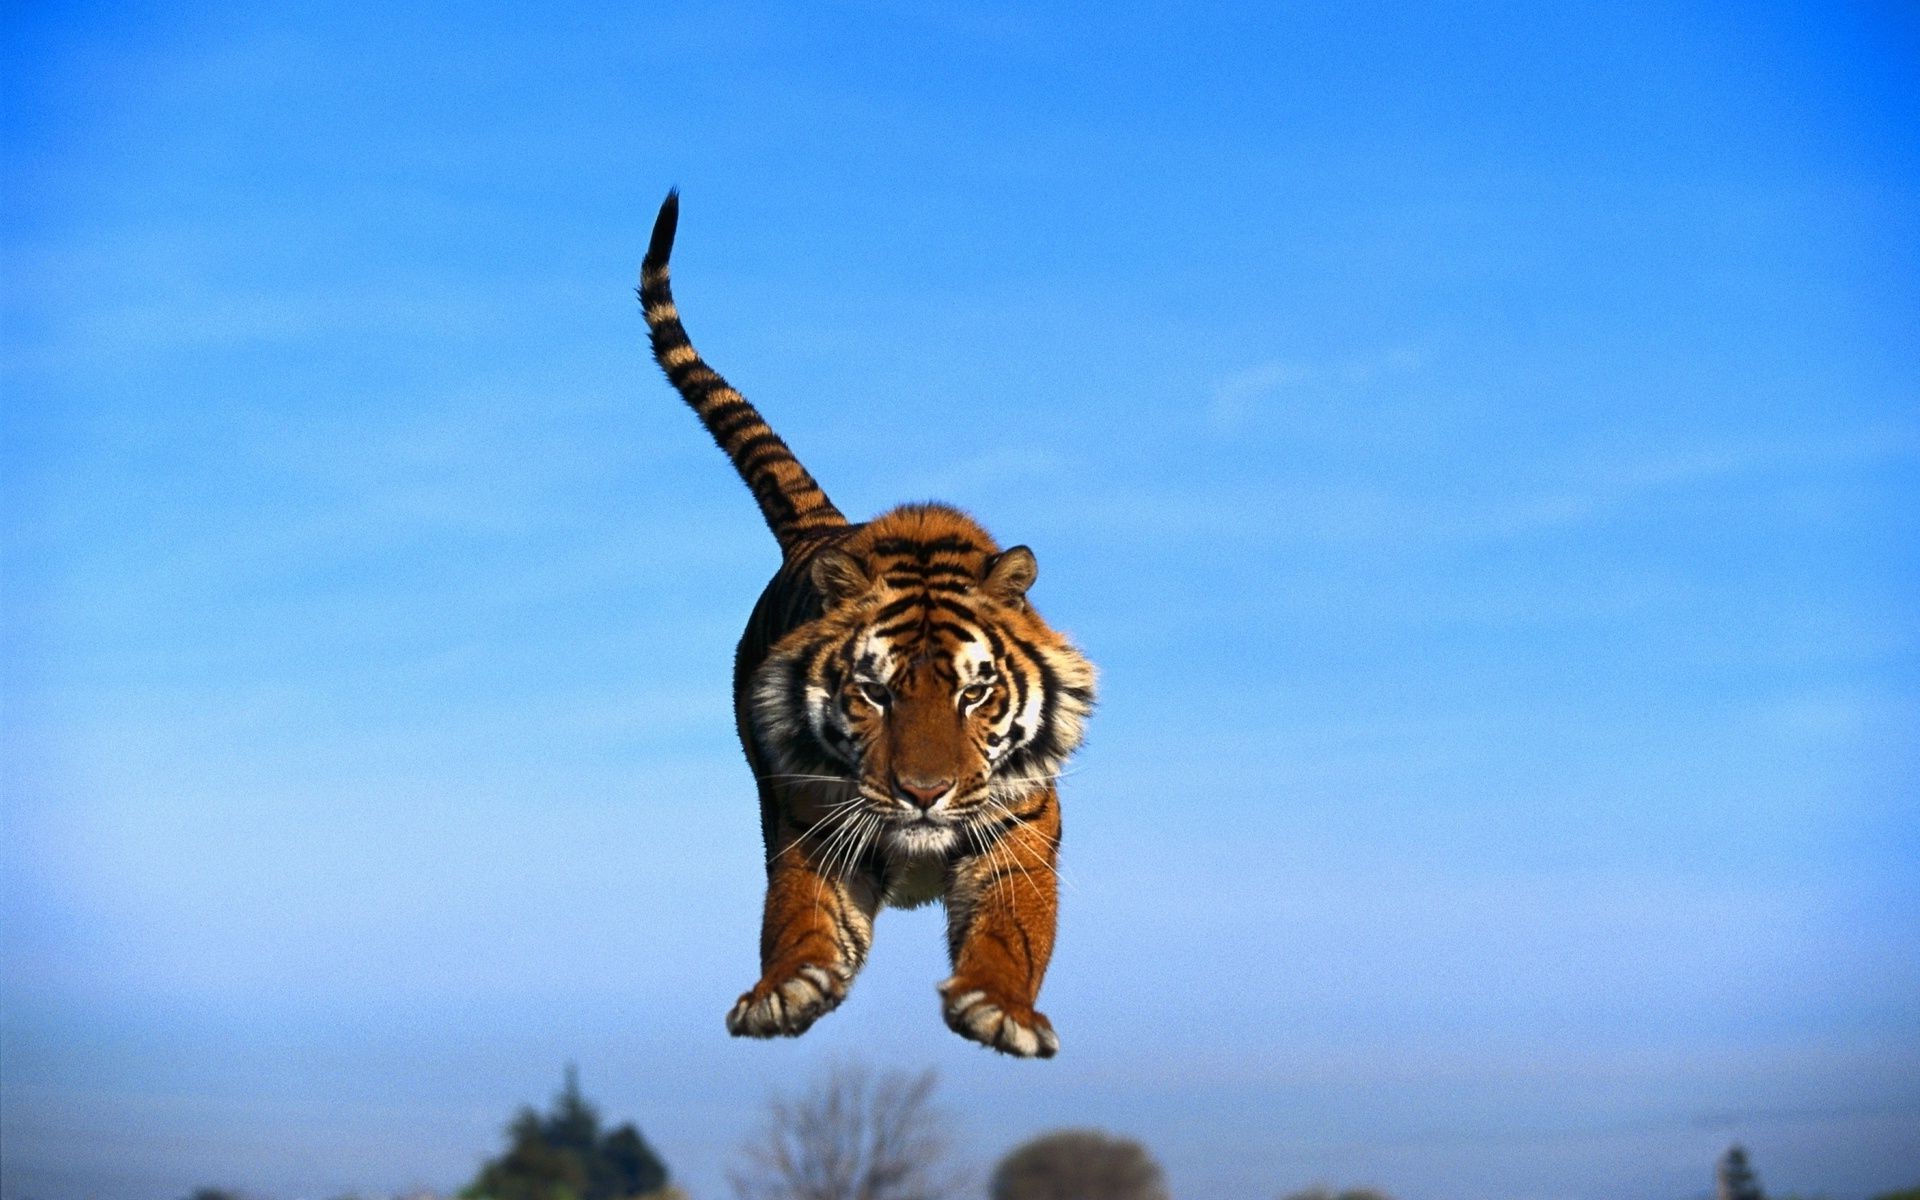 tigers wildlife nature mammal outdoors cat